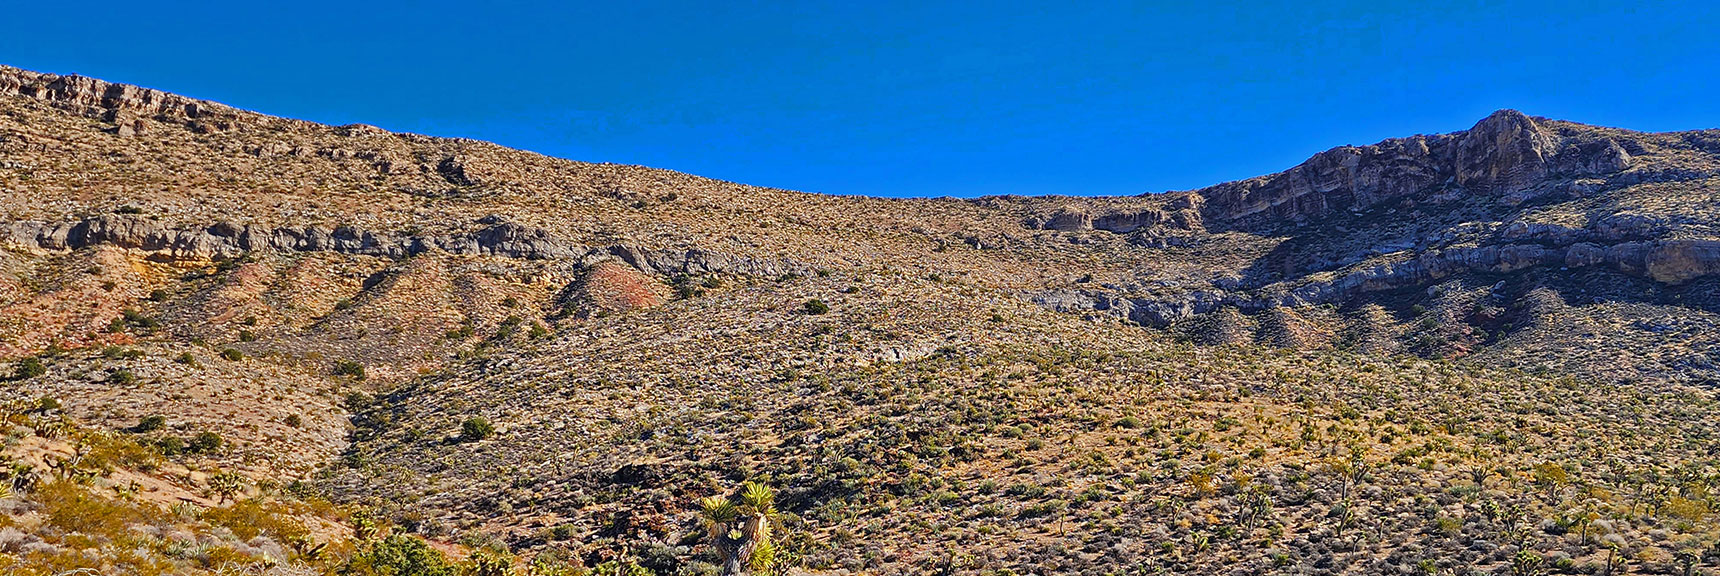 Perfect Gradual Summit Slope. A Future Walk to the Top! | Landmark Bluff Circuit | Lovell Canyon, Nevada